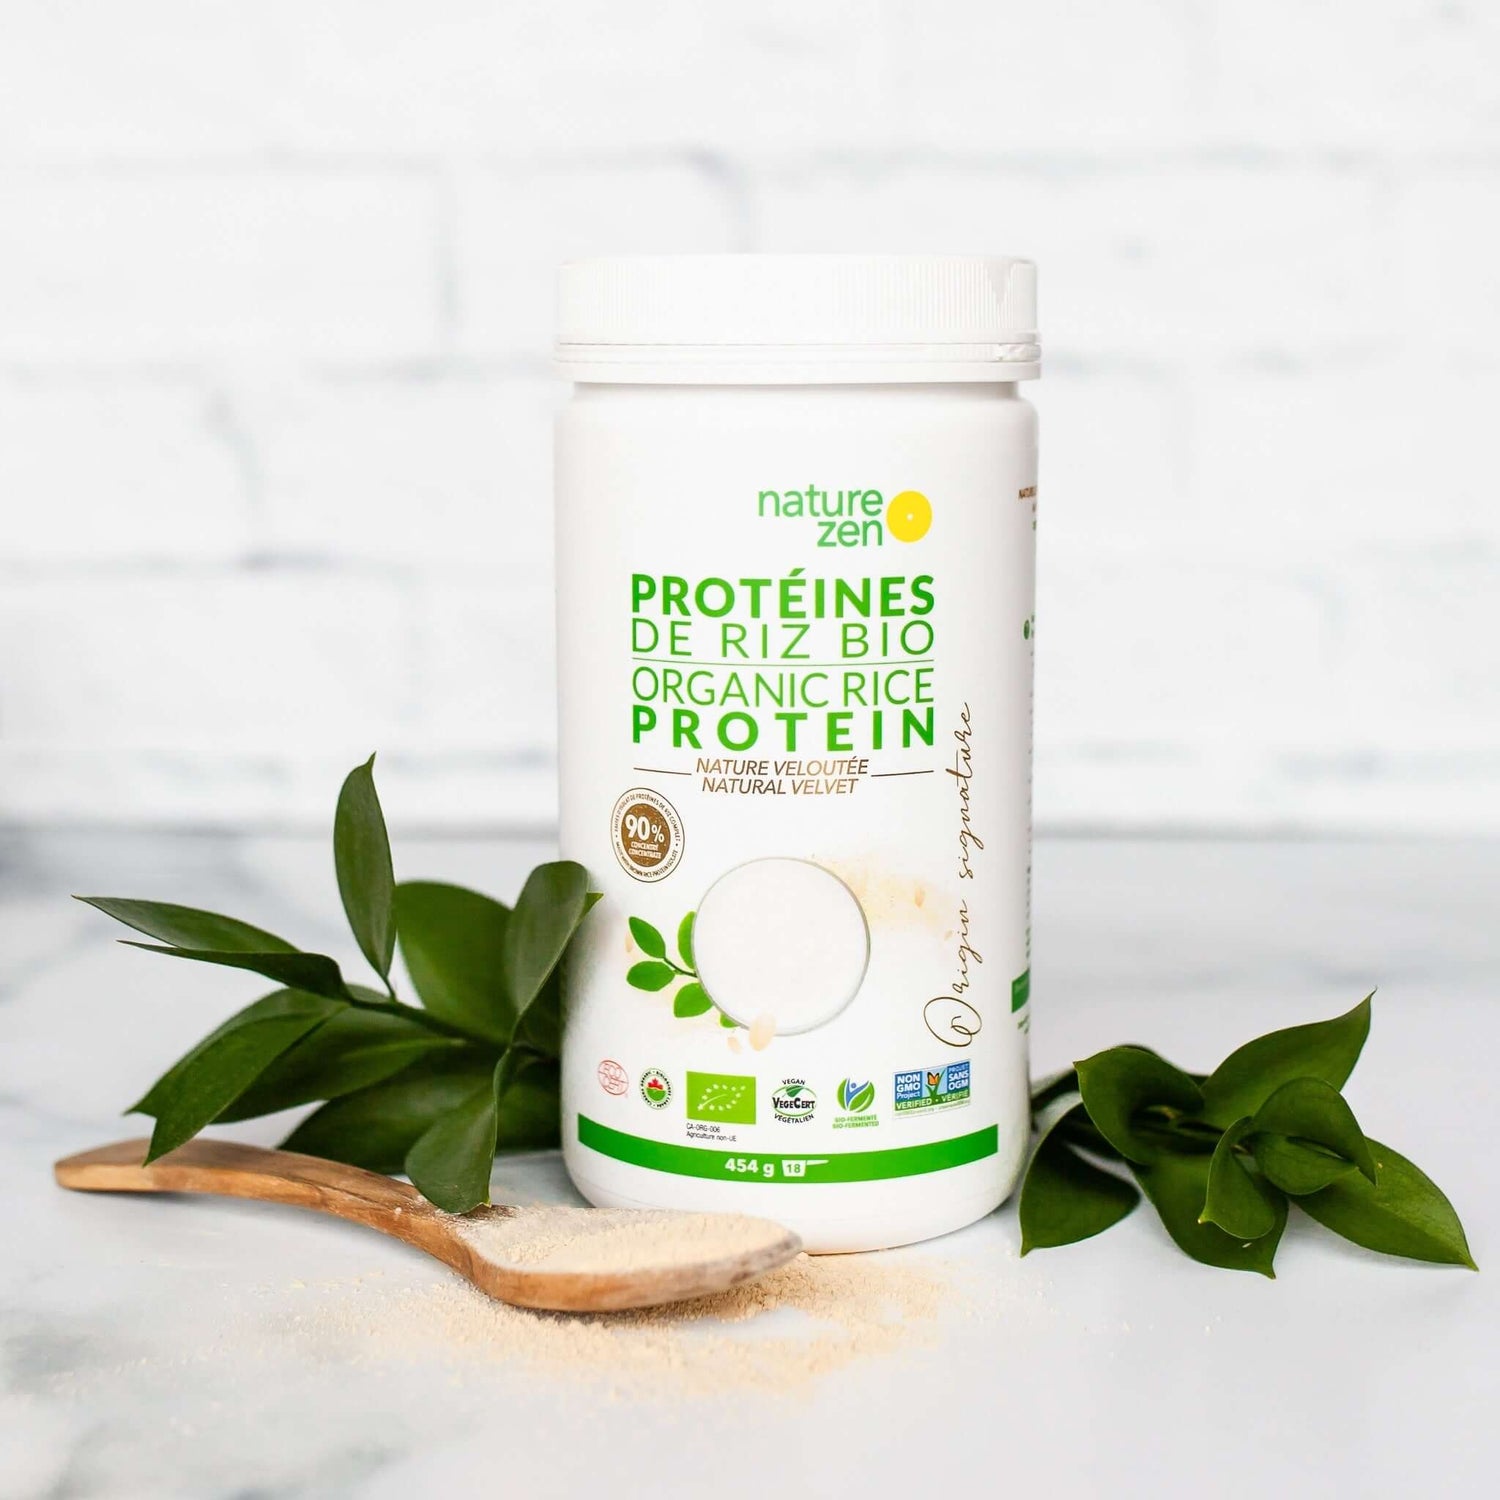 Nature Zen Origin - Organic Rice Protein Powder - Natural Velvet (454g) protein